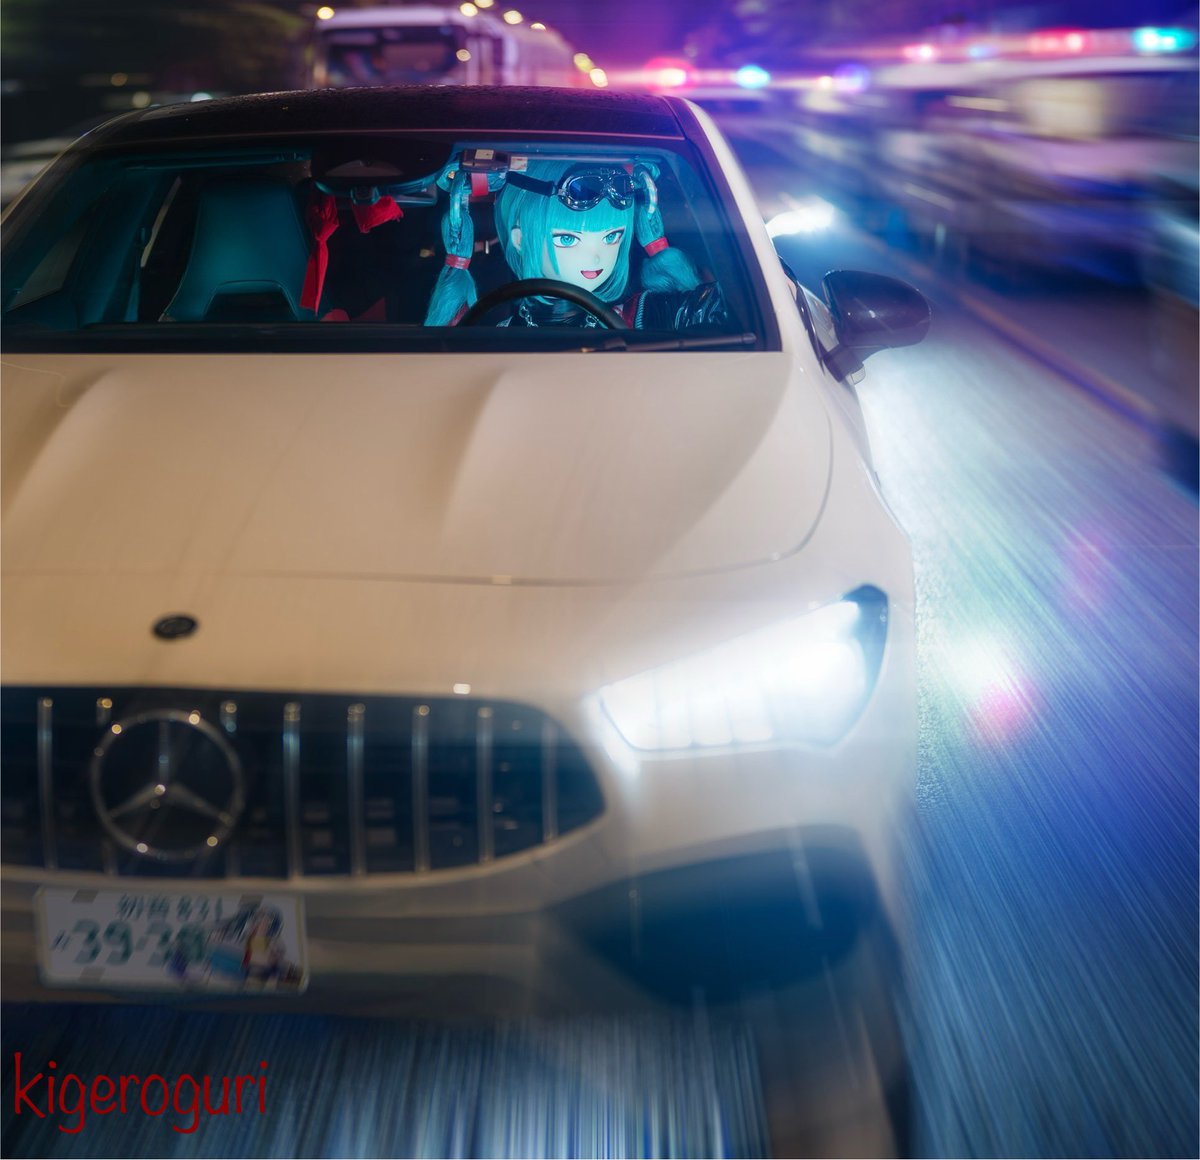 Fast & Furious Feat. Hatsune Miku 感谢顶级 摄影@yx3060 后期@jyyosa @abiabia585087 车主@Kiger_naipao 注：背景纯由ps合成虚构，车辆此时并未启动且停在路边，没有任何危险驾驶与违章行为发生